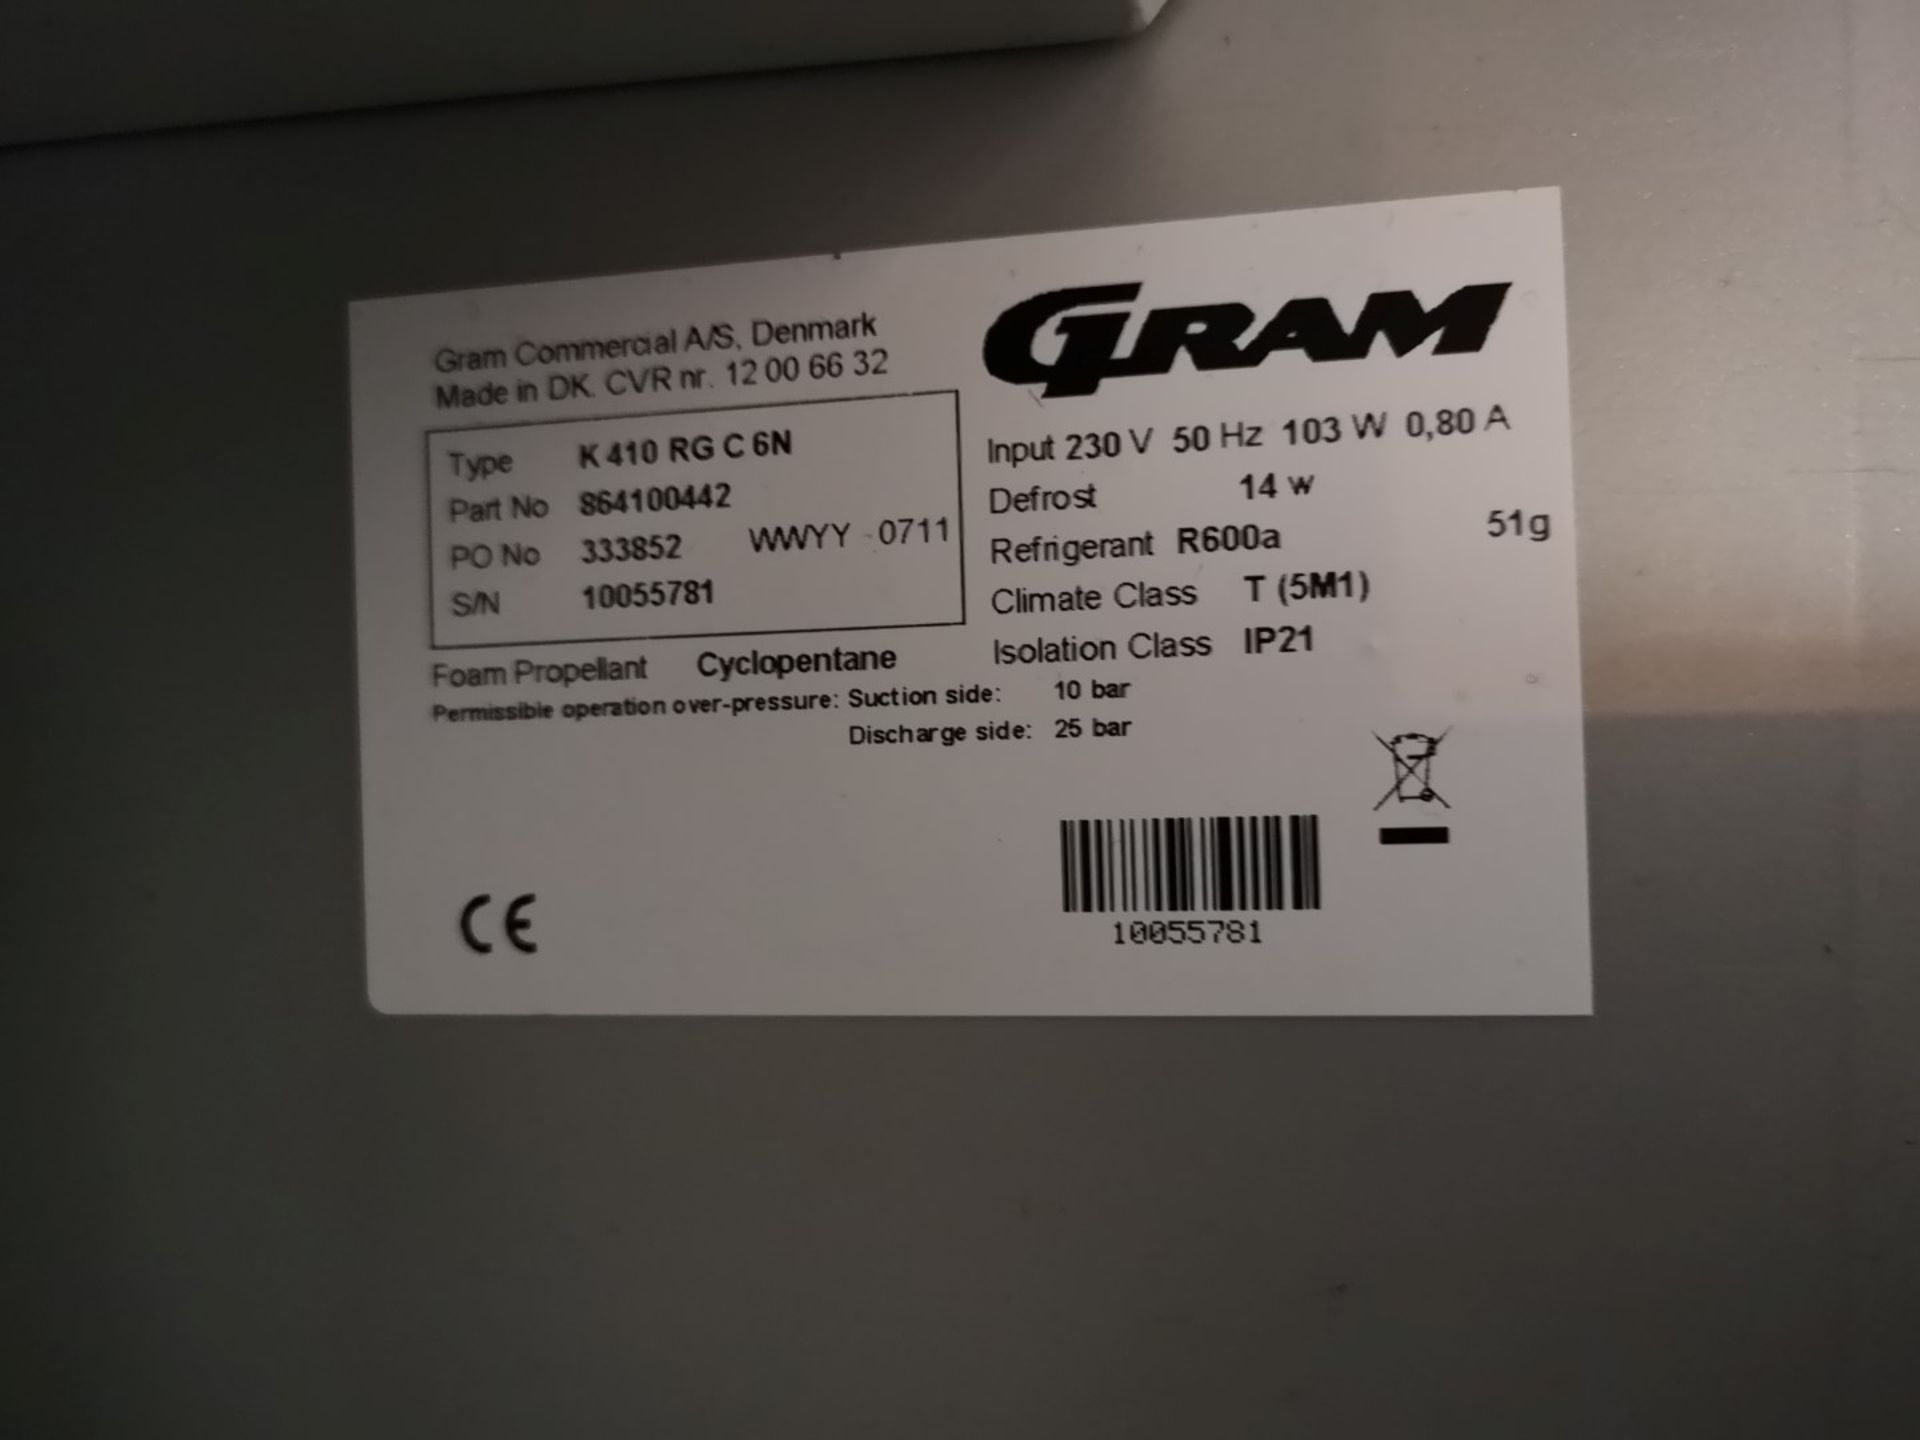 Gram Stainless Steel Single Door Refrigerator - Image 2 of 2